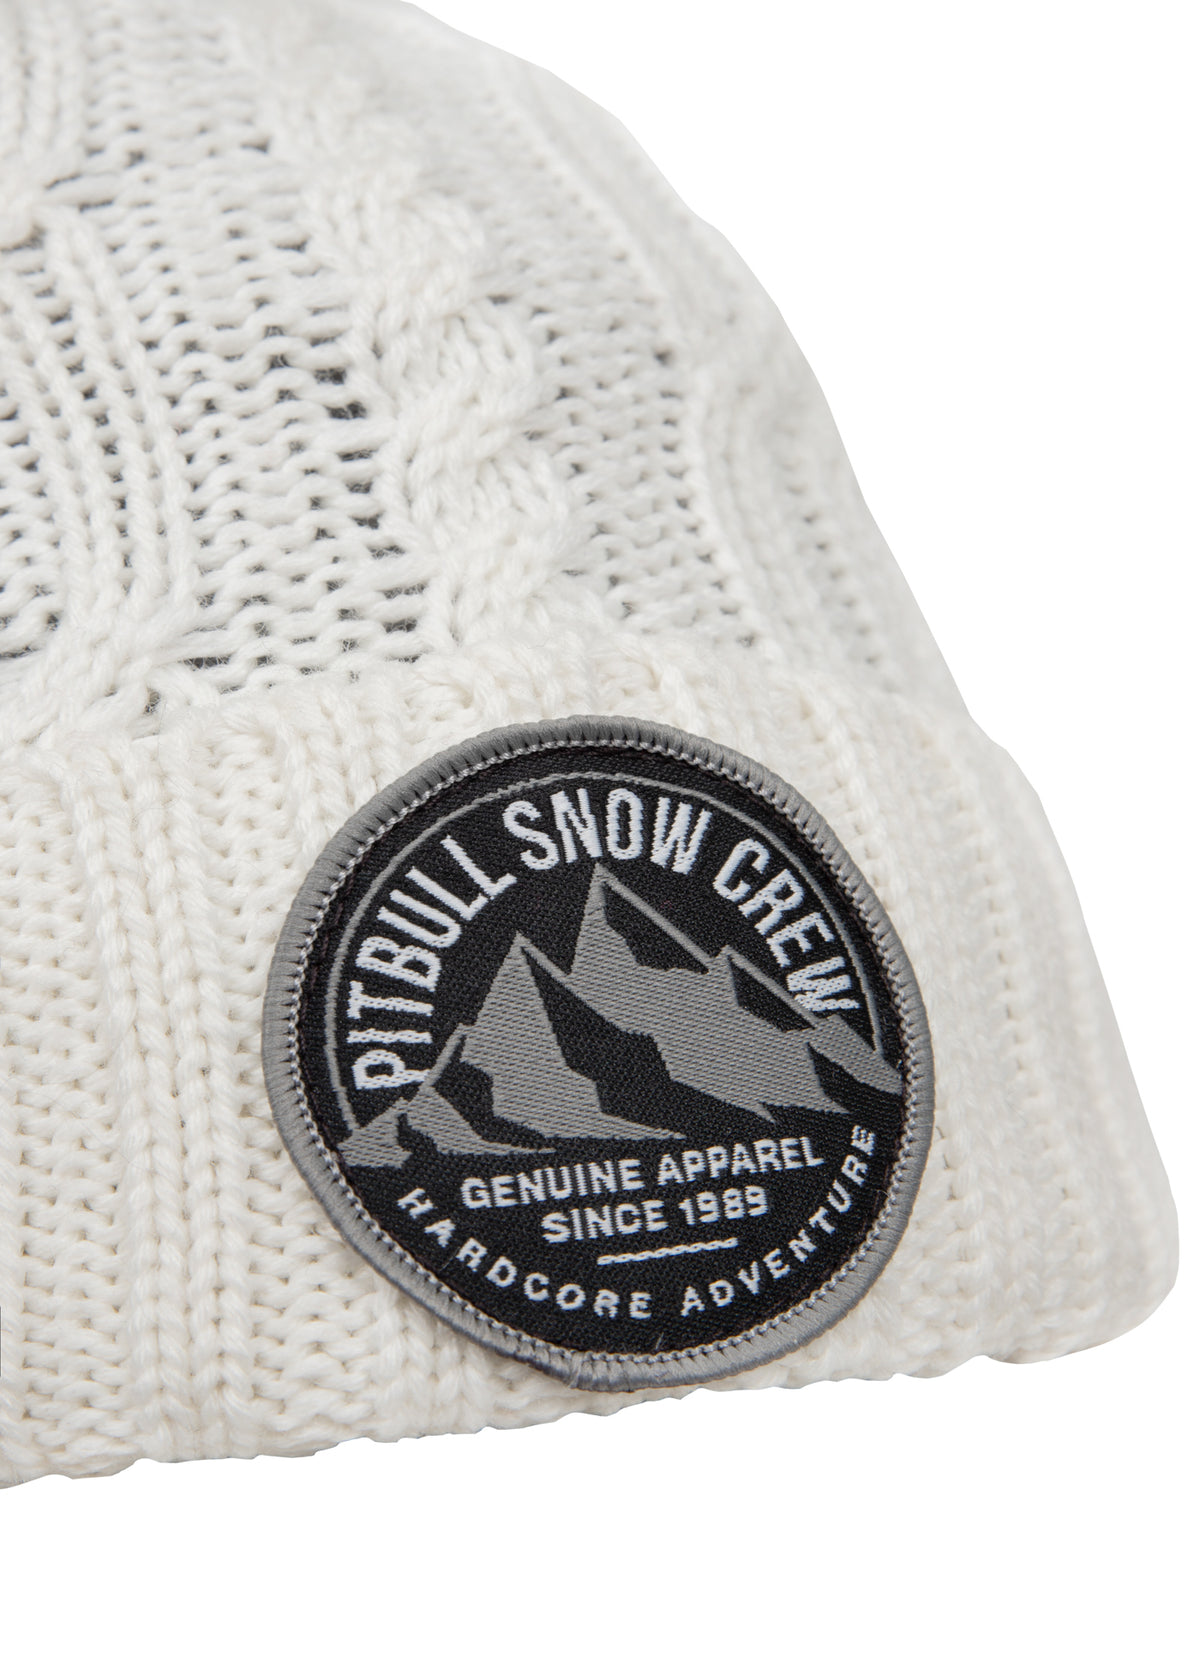 Winter Beanie SNOW CREW White - Pitbull West Coast International Store 